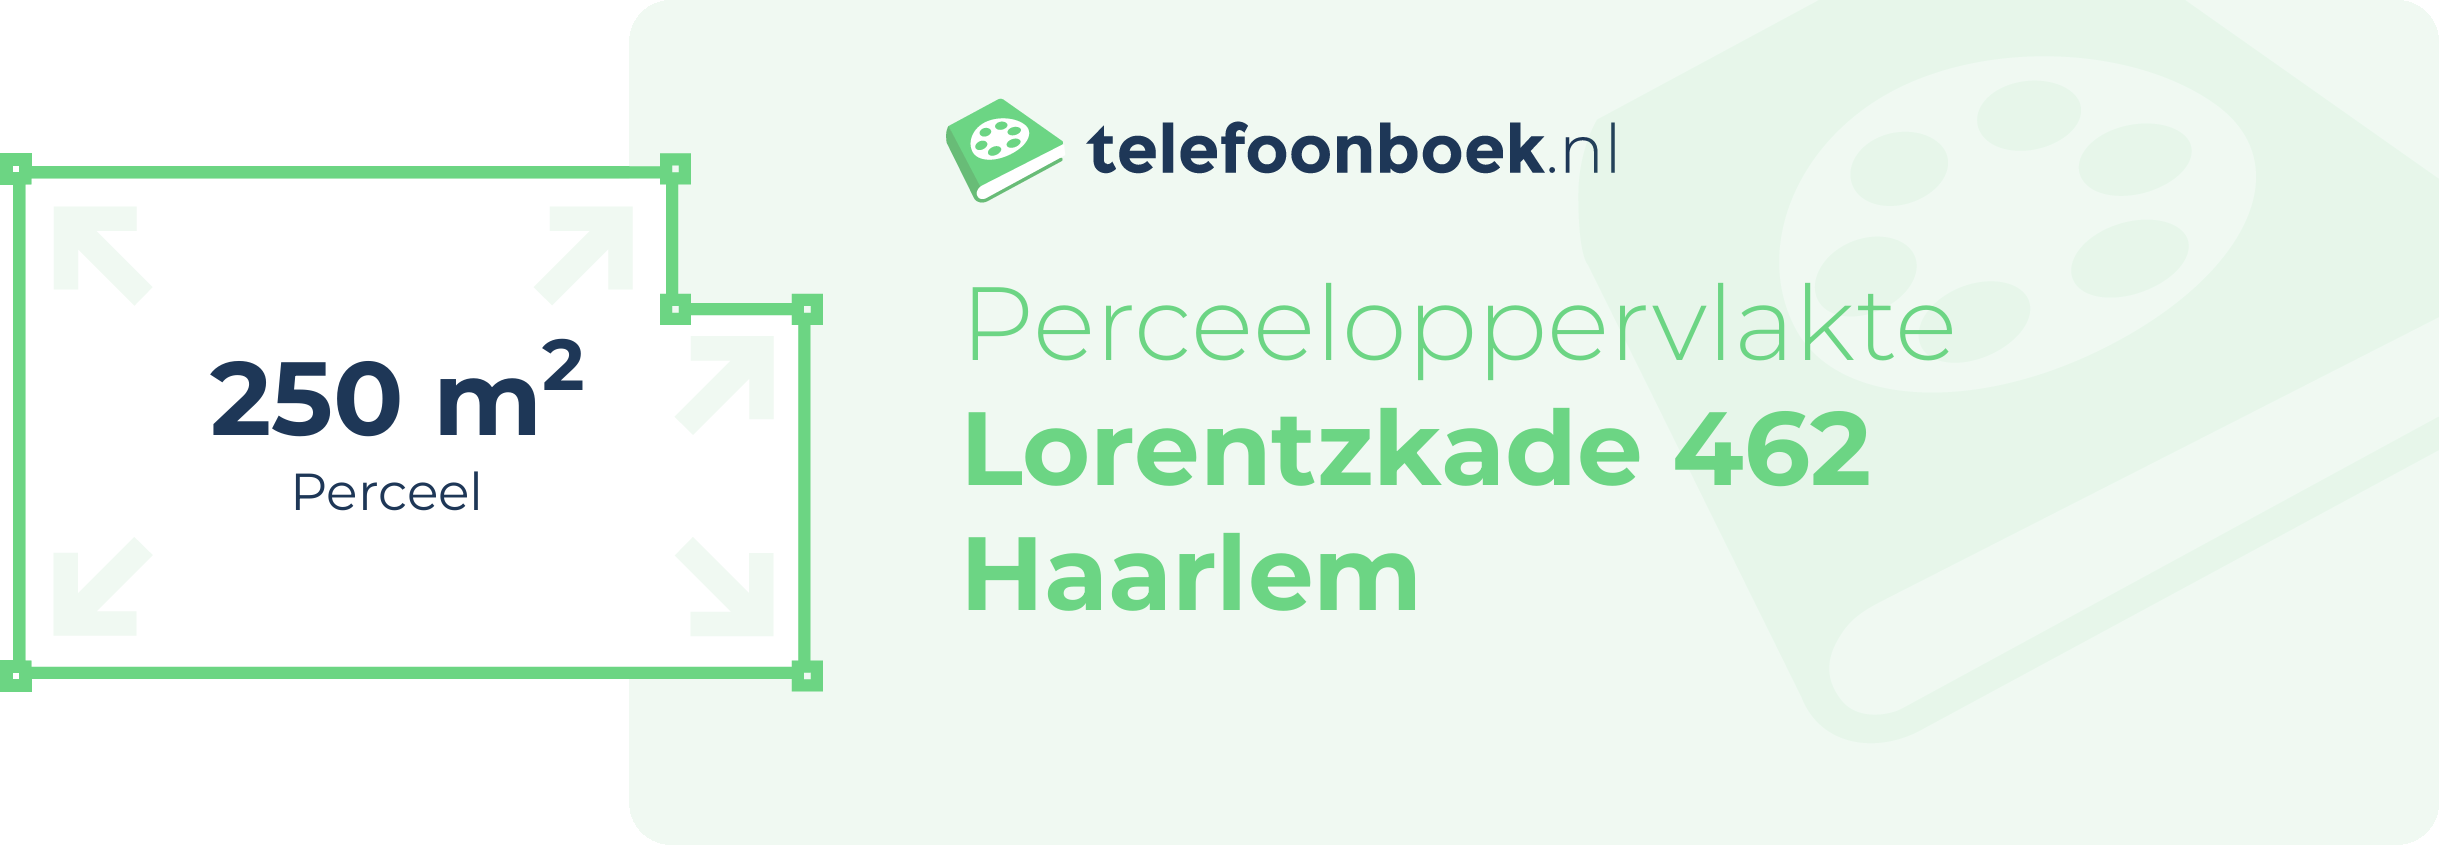 Perceeloppervlakte Lorentzkade 462 Haarlem